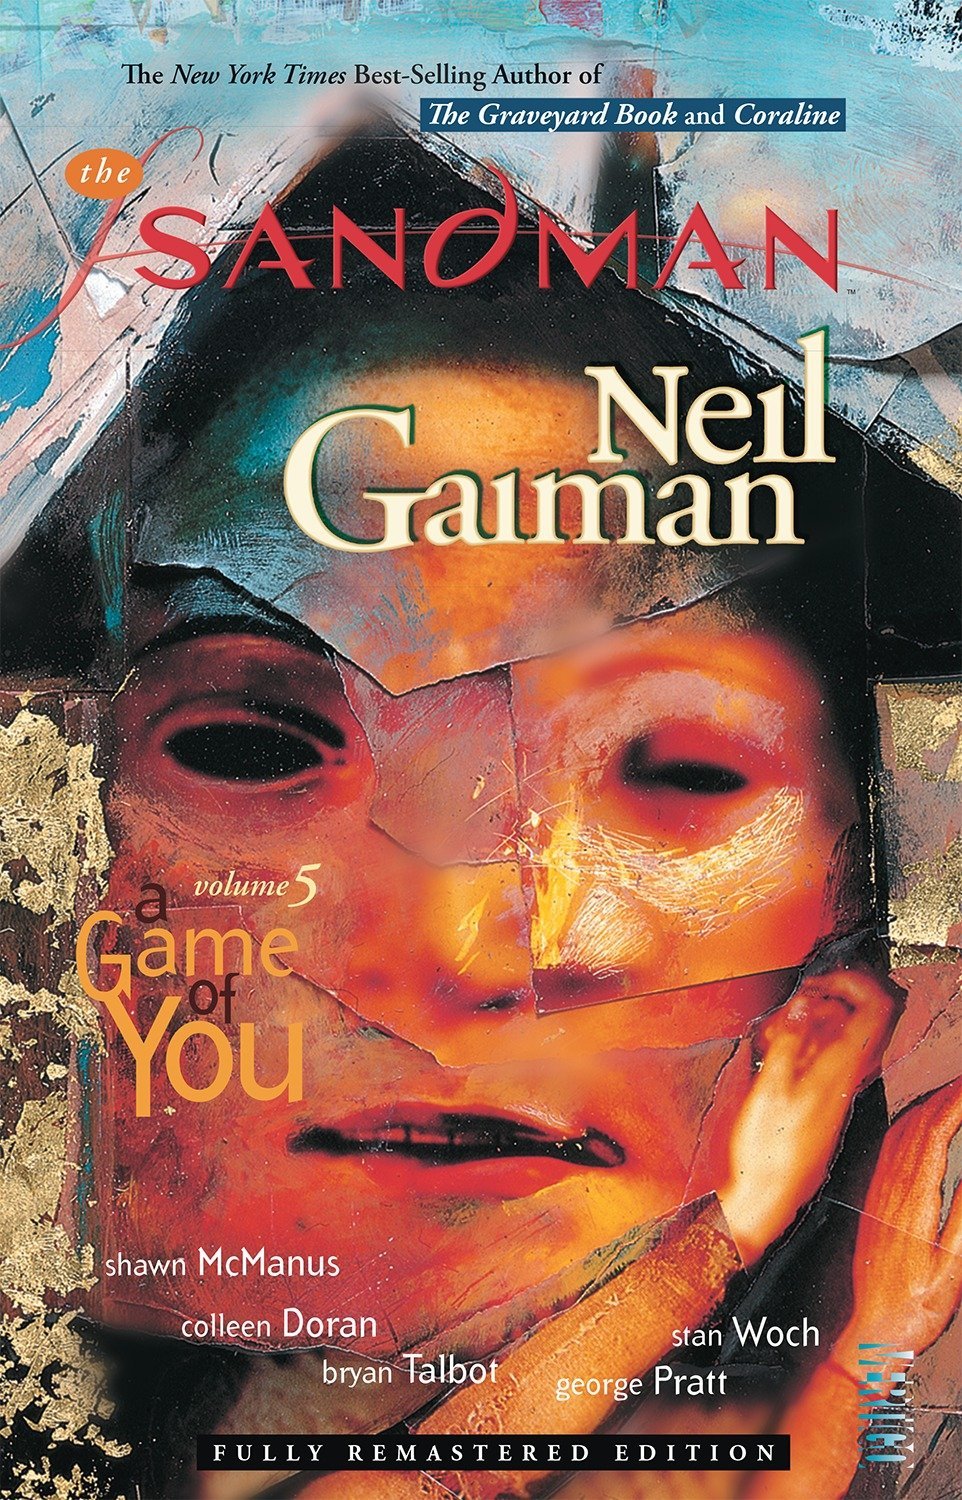 The Sandman, Vol. 5: A Game of You by Neil Gaiman